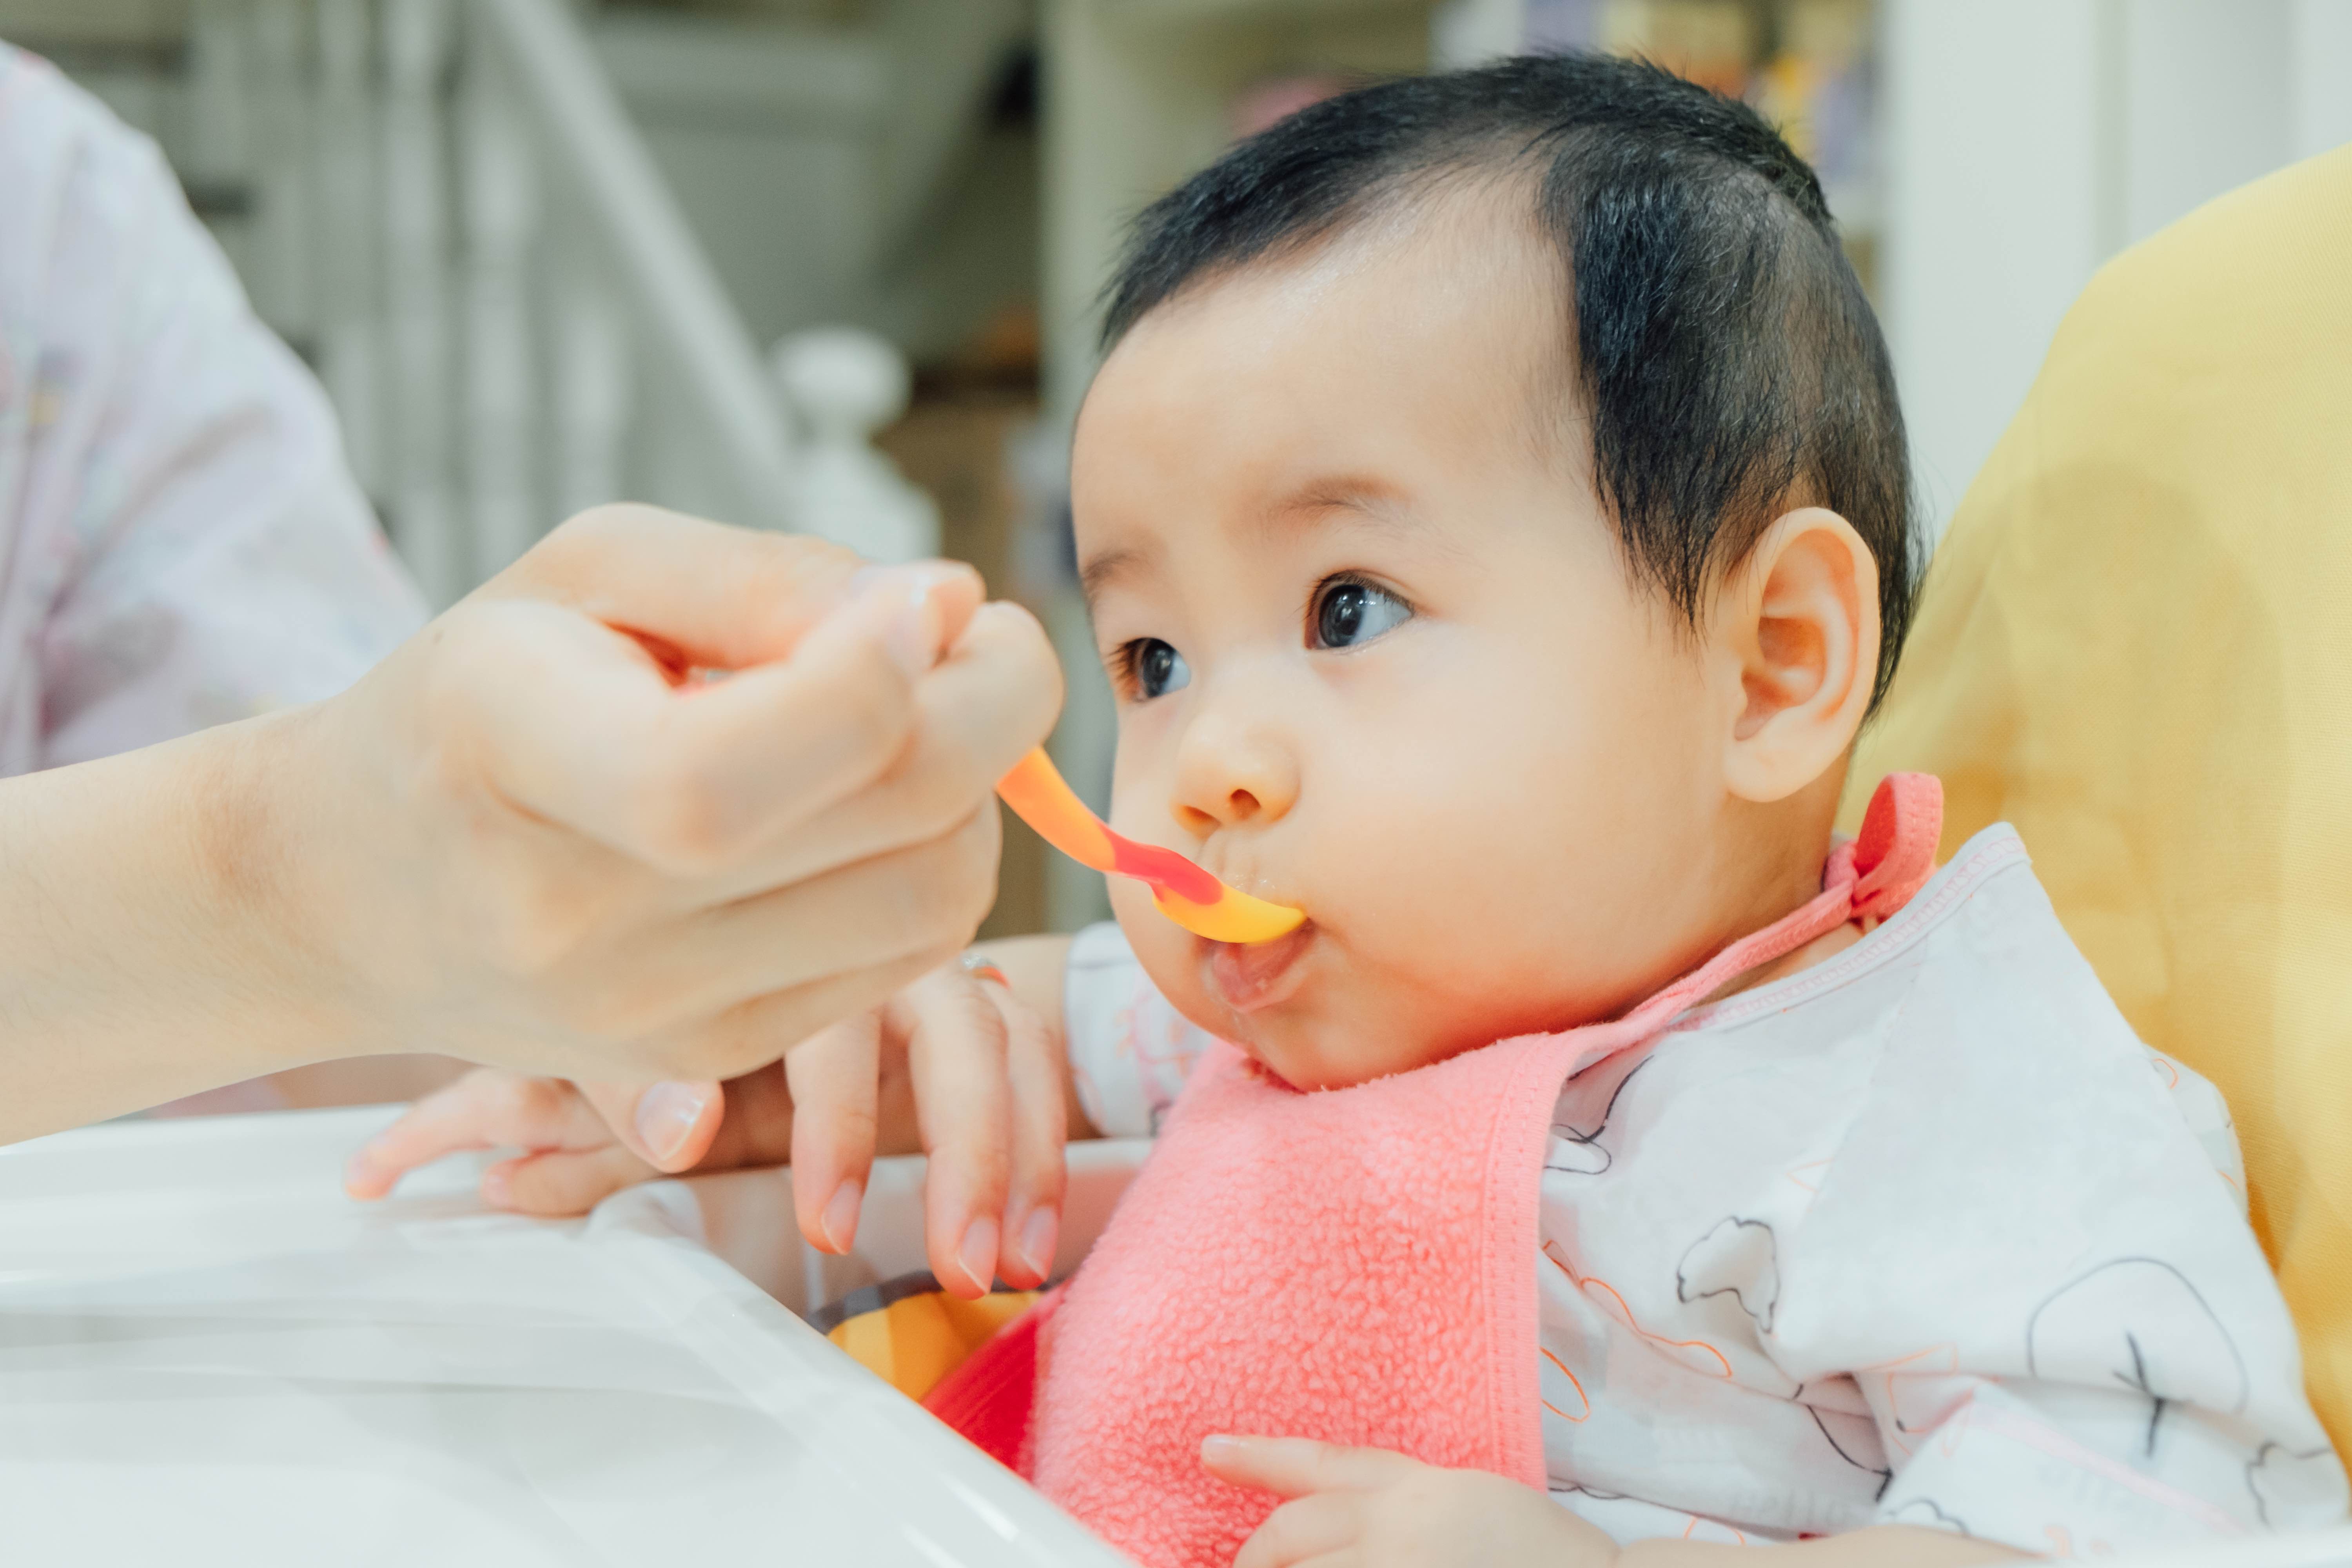 Pentingnya mengatur jadwal menu MPASI bayi 6 bulan | Bersosial.com